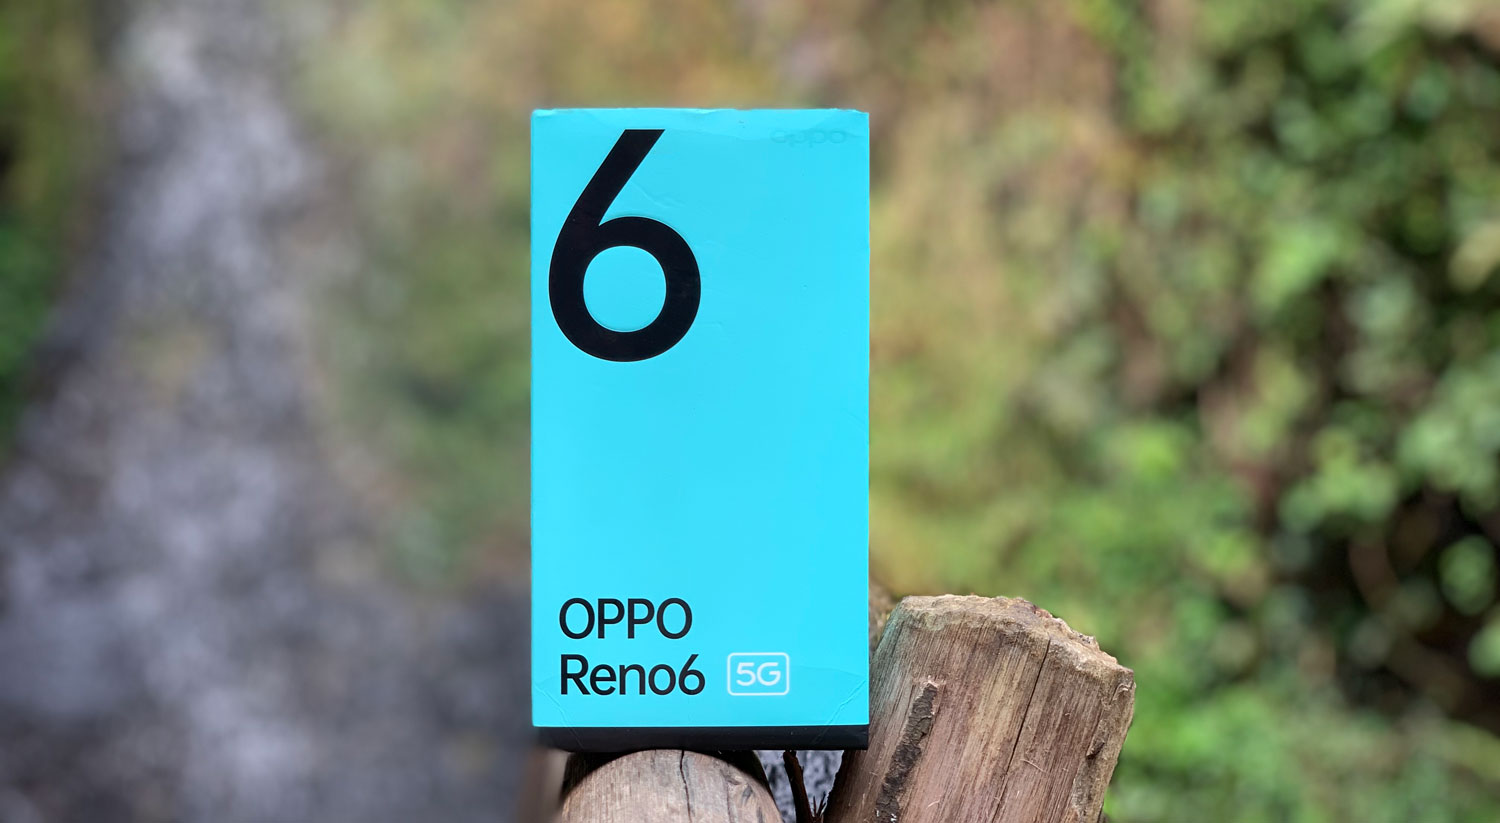 OPPO-Reno6-Main-Image